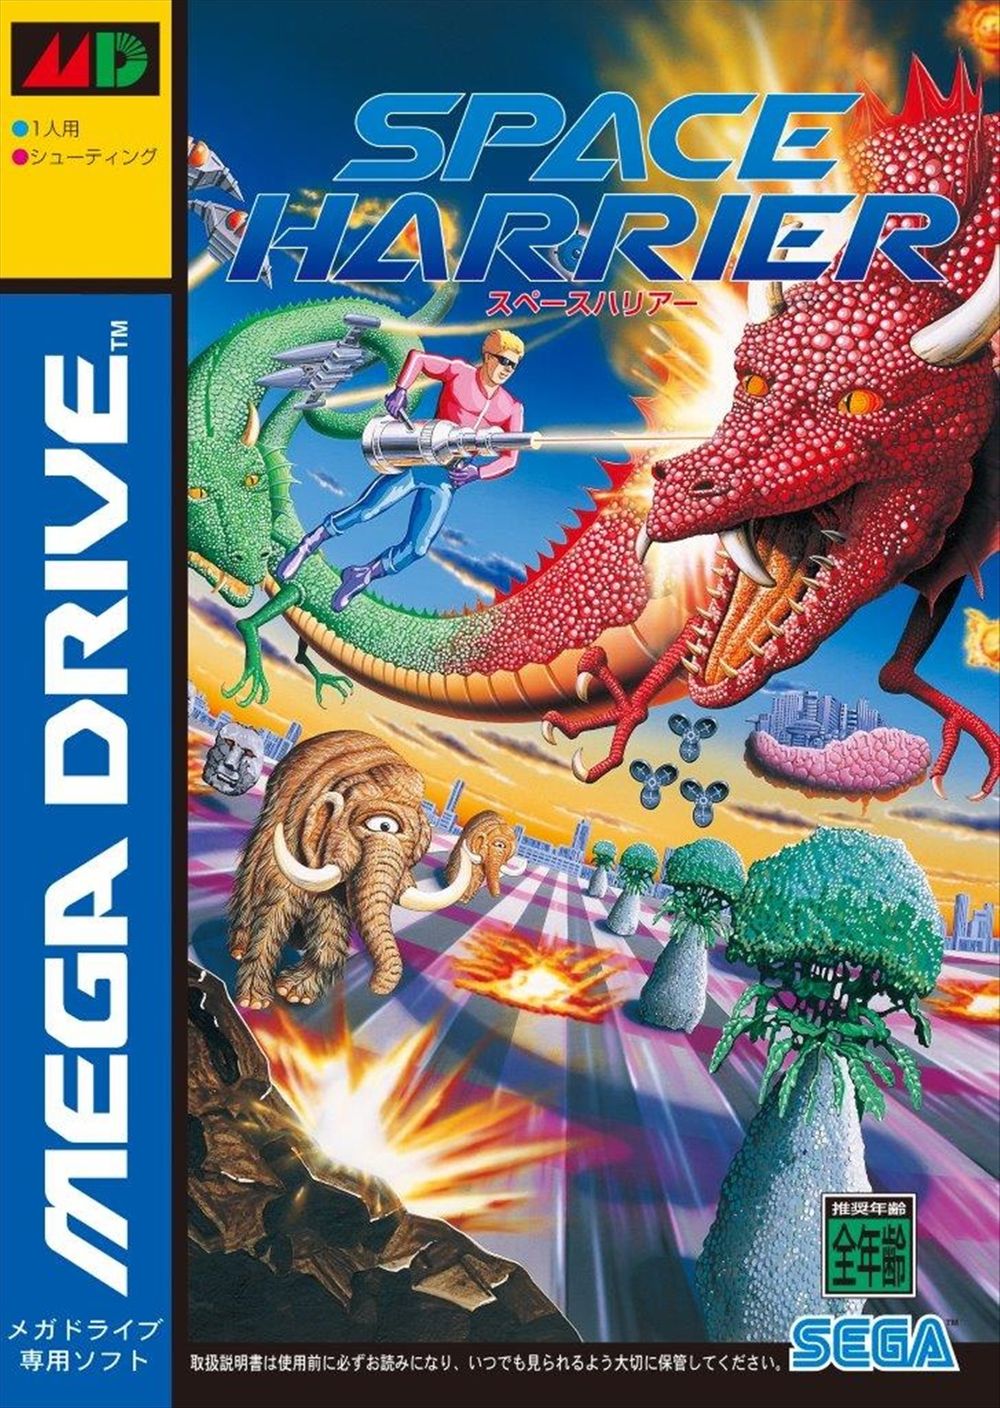 「Mega Drive Mini 2」公布最终收录游戏阵容 将包含多款未曾问世之梦幻作品